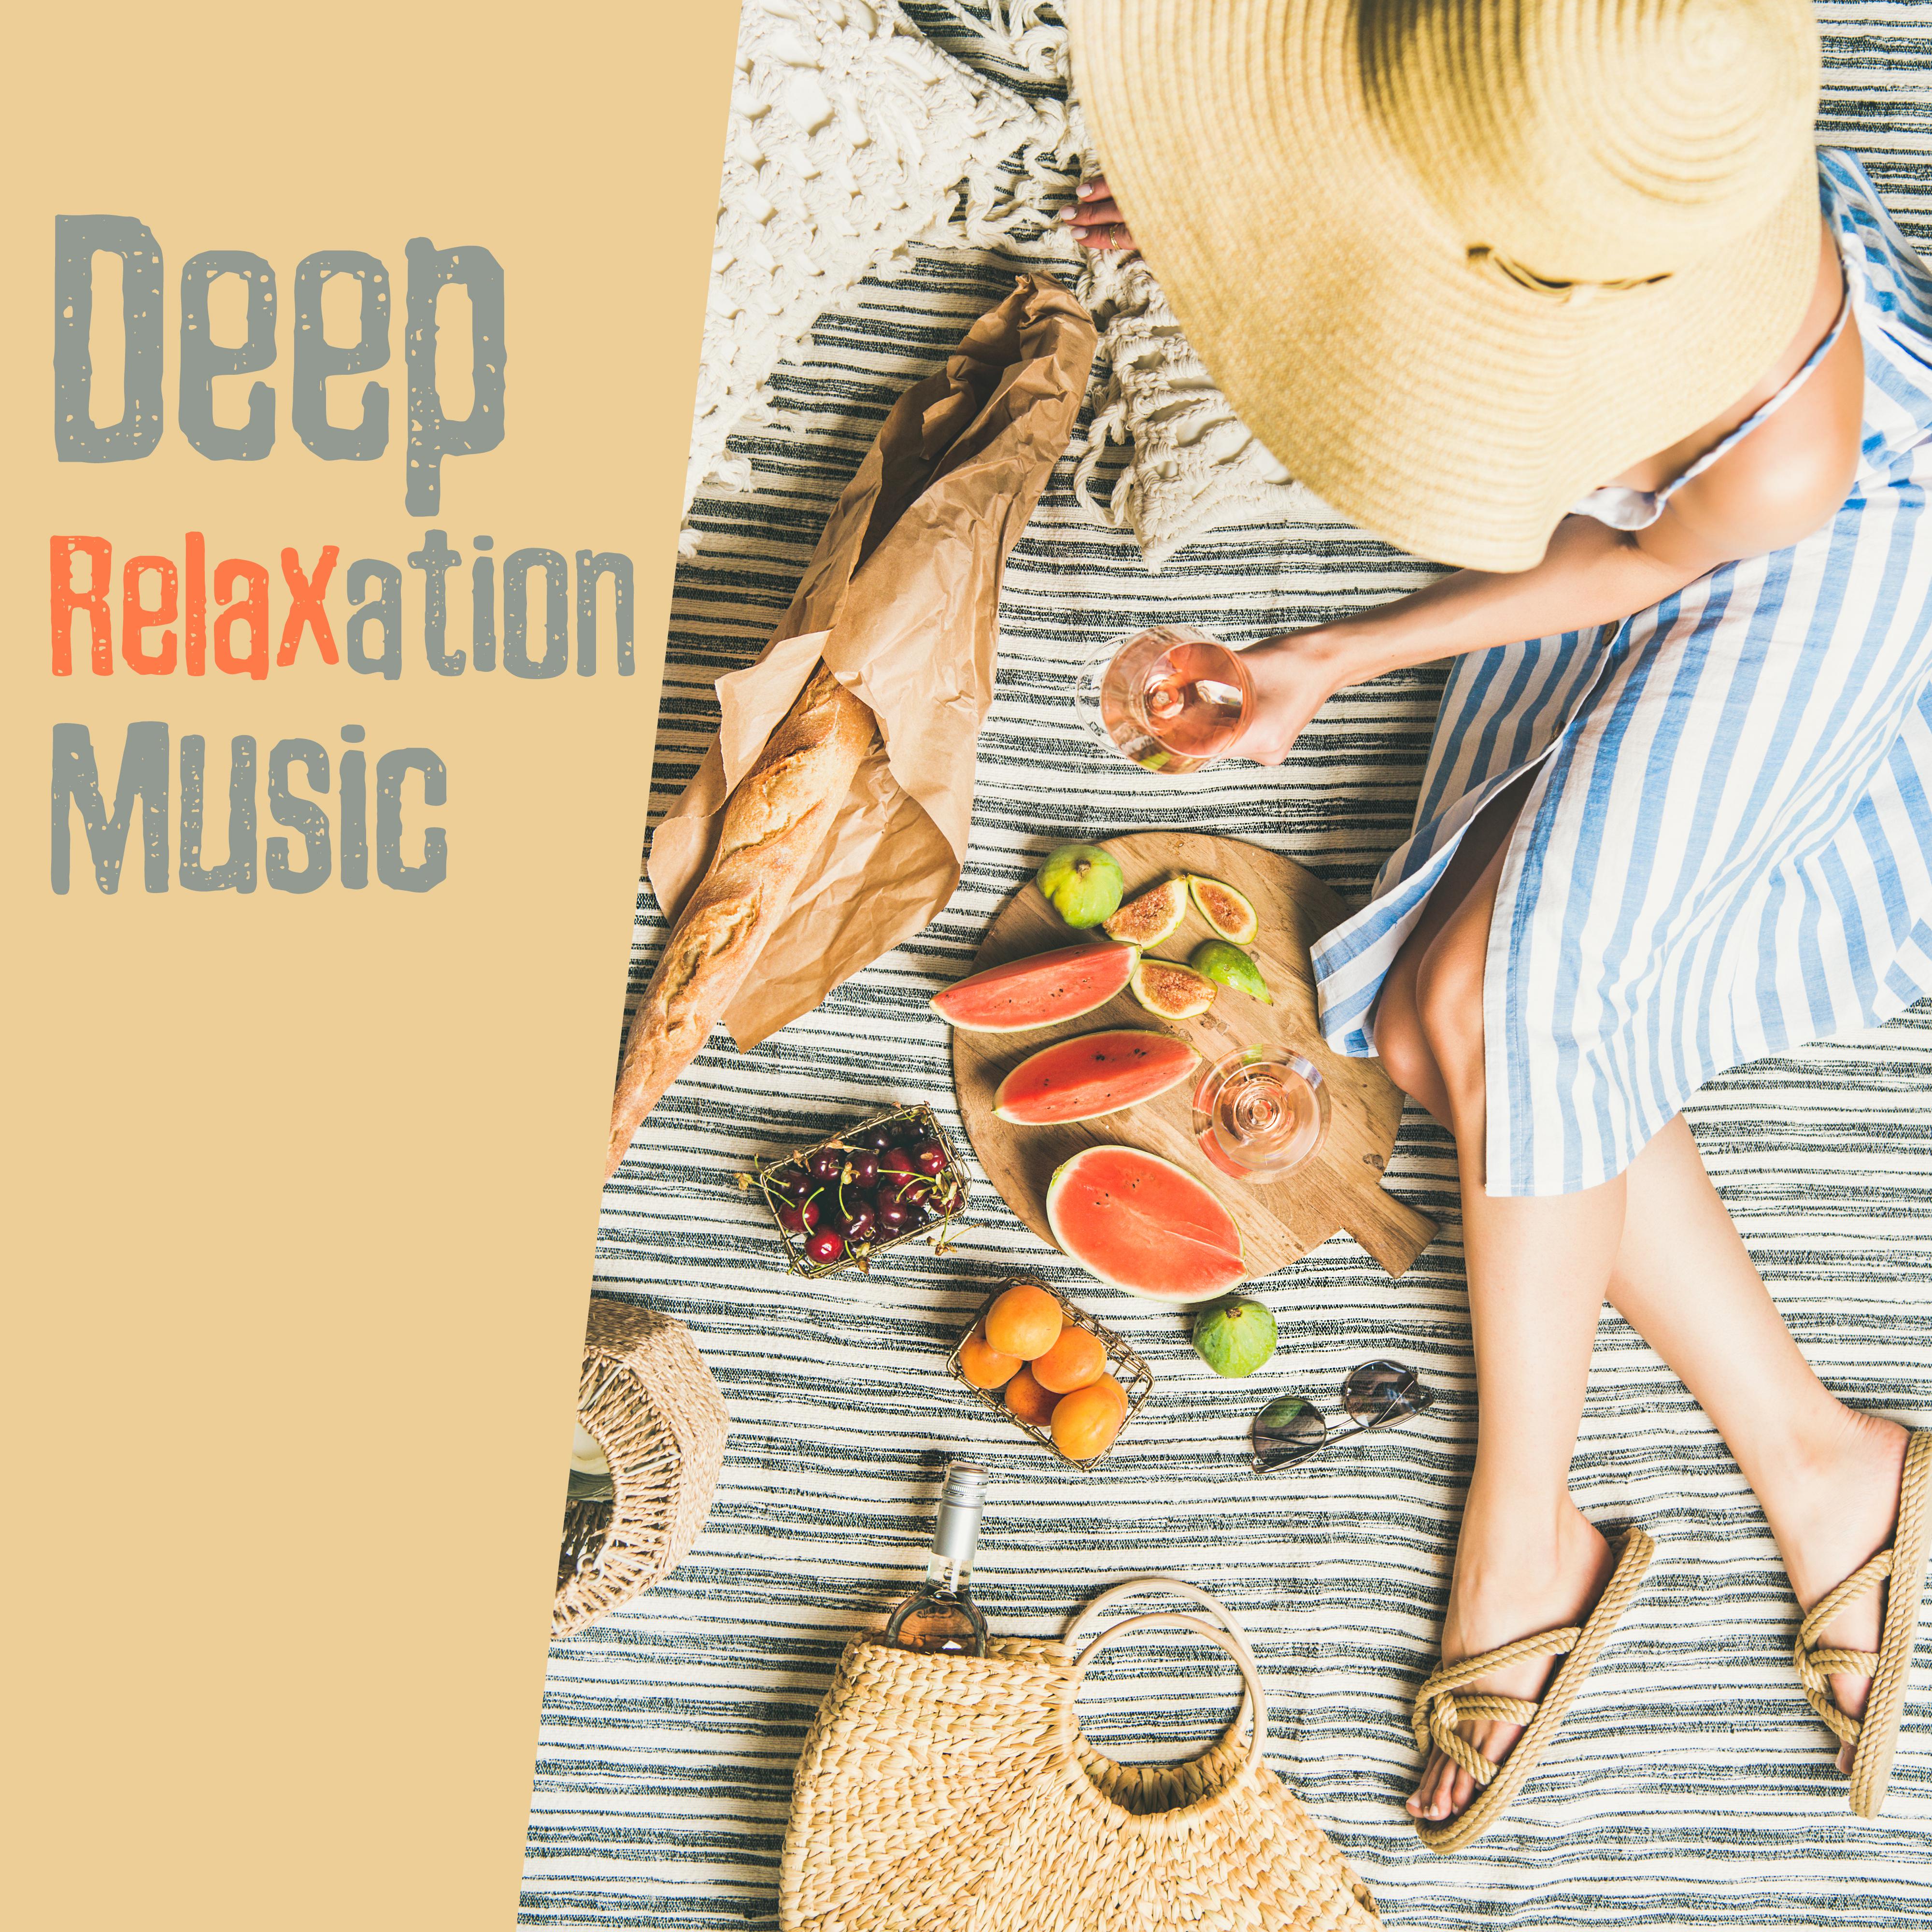 Deep Relaxation Music